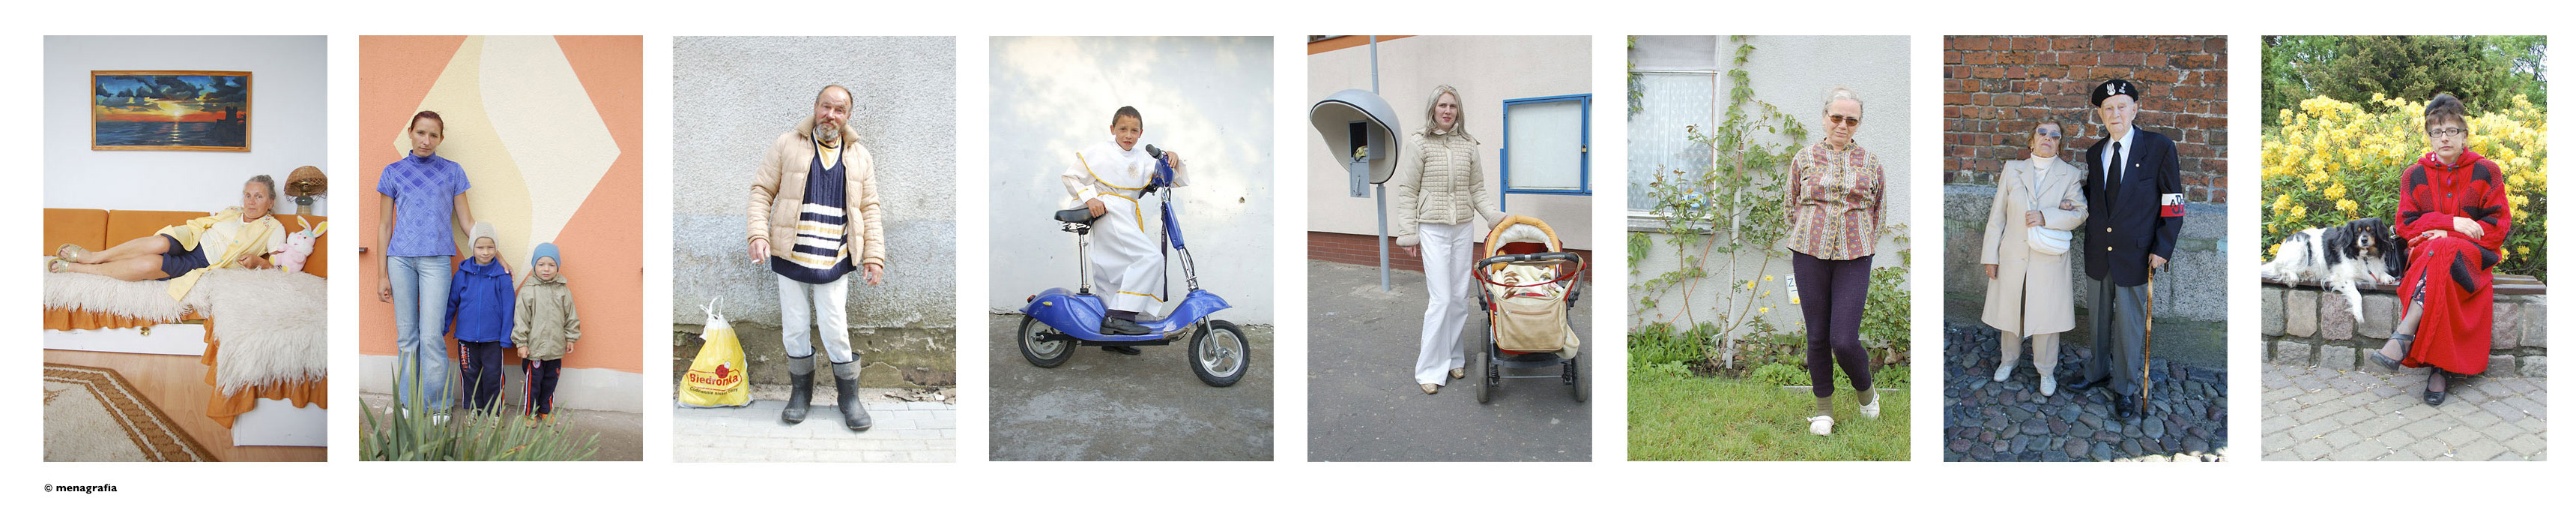 Menagrafia | Marzena Mroz |Hamburg | Portraits | Streetfotografie Polish people on the street